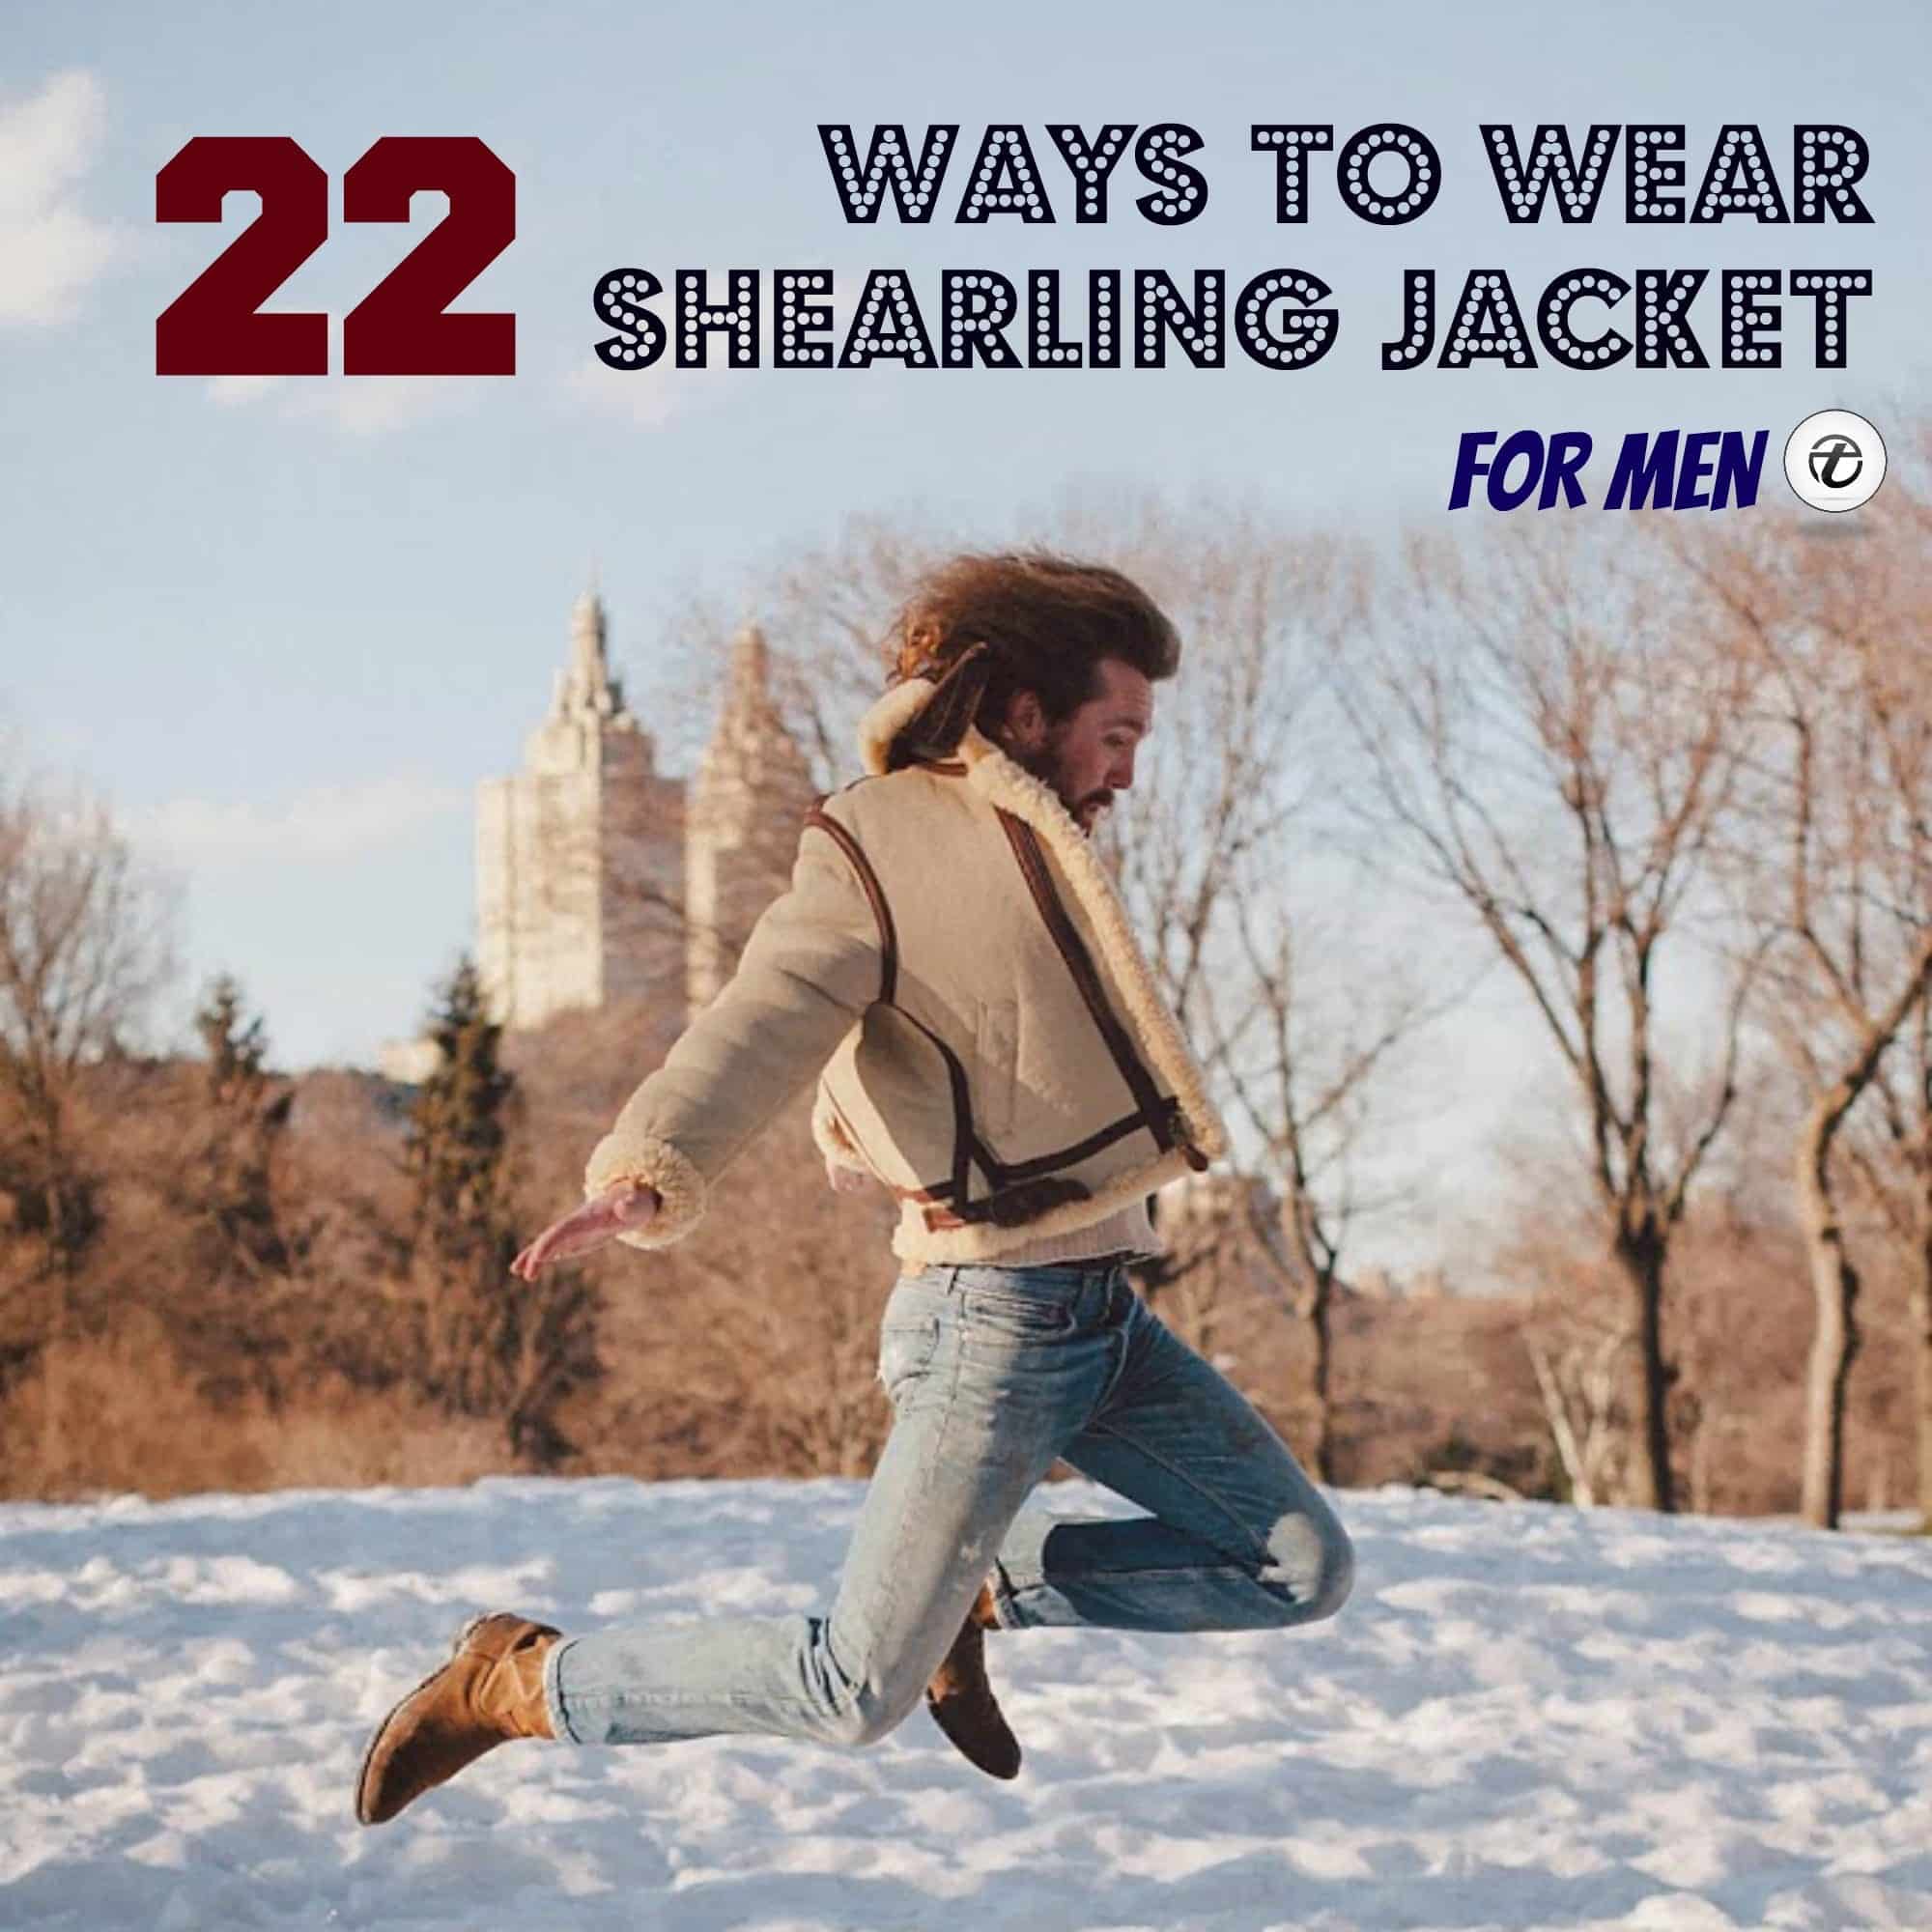 Men Shearling Jacket Outfits-22 Ways To Wear Shearling Jacket